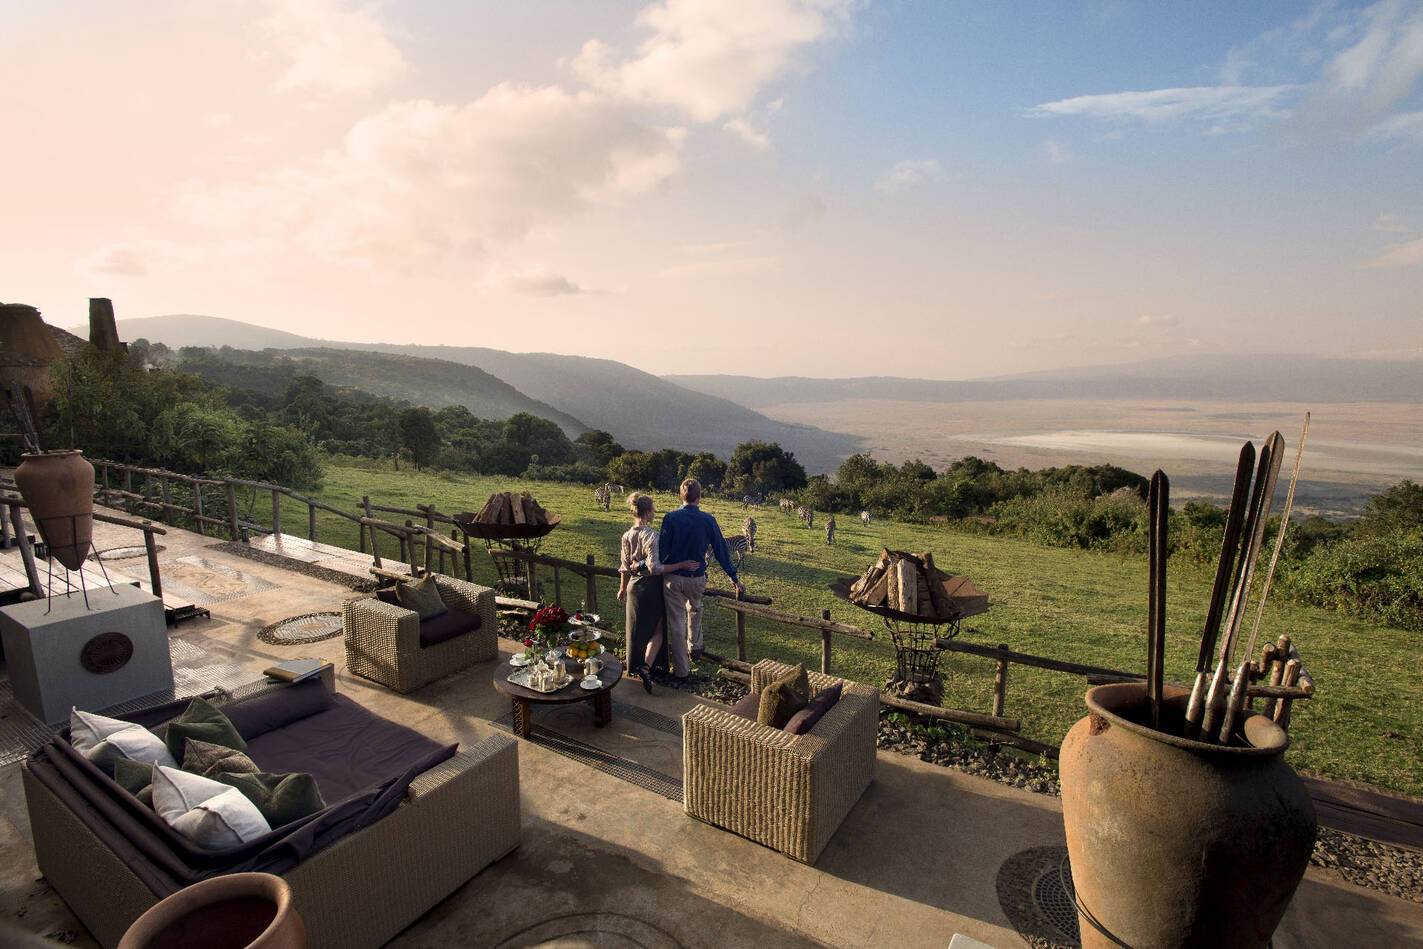 Tanzanie ngorongoro Crater Lodge And Beyond